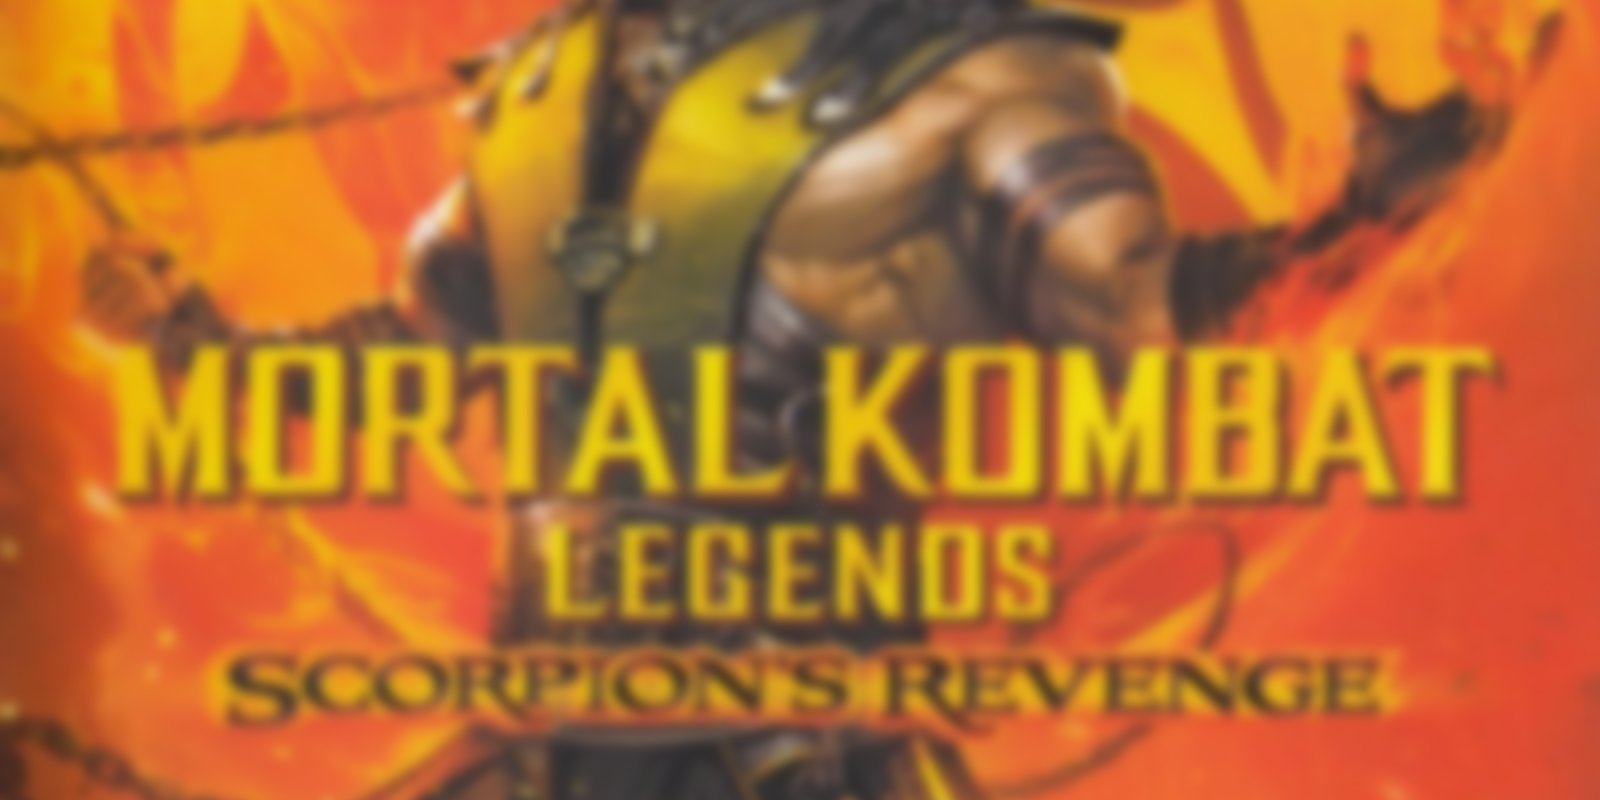 Mortal Kombat Legends - Scorpion's Revenge